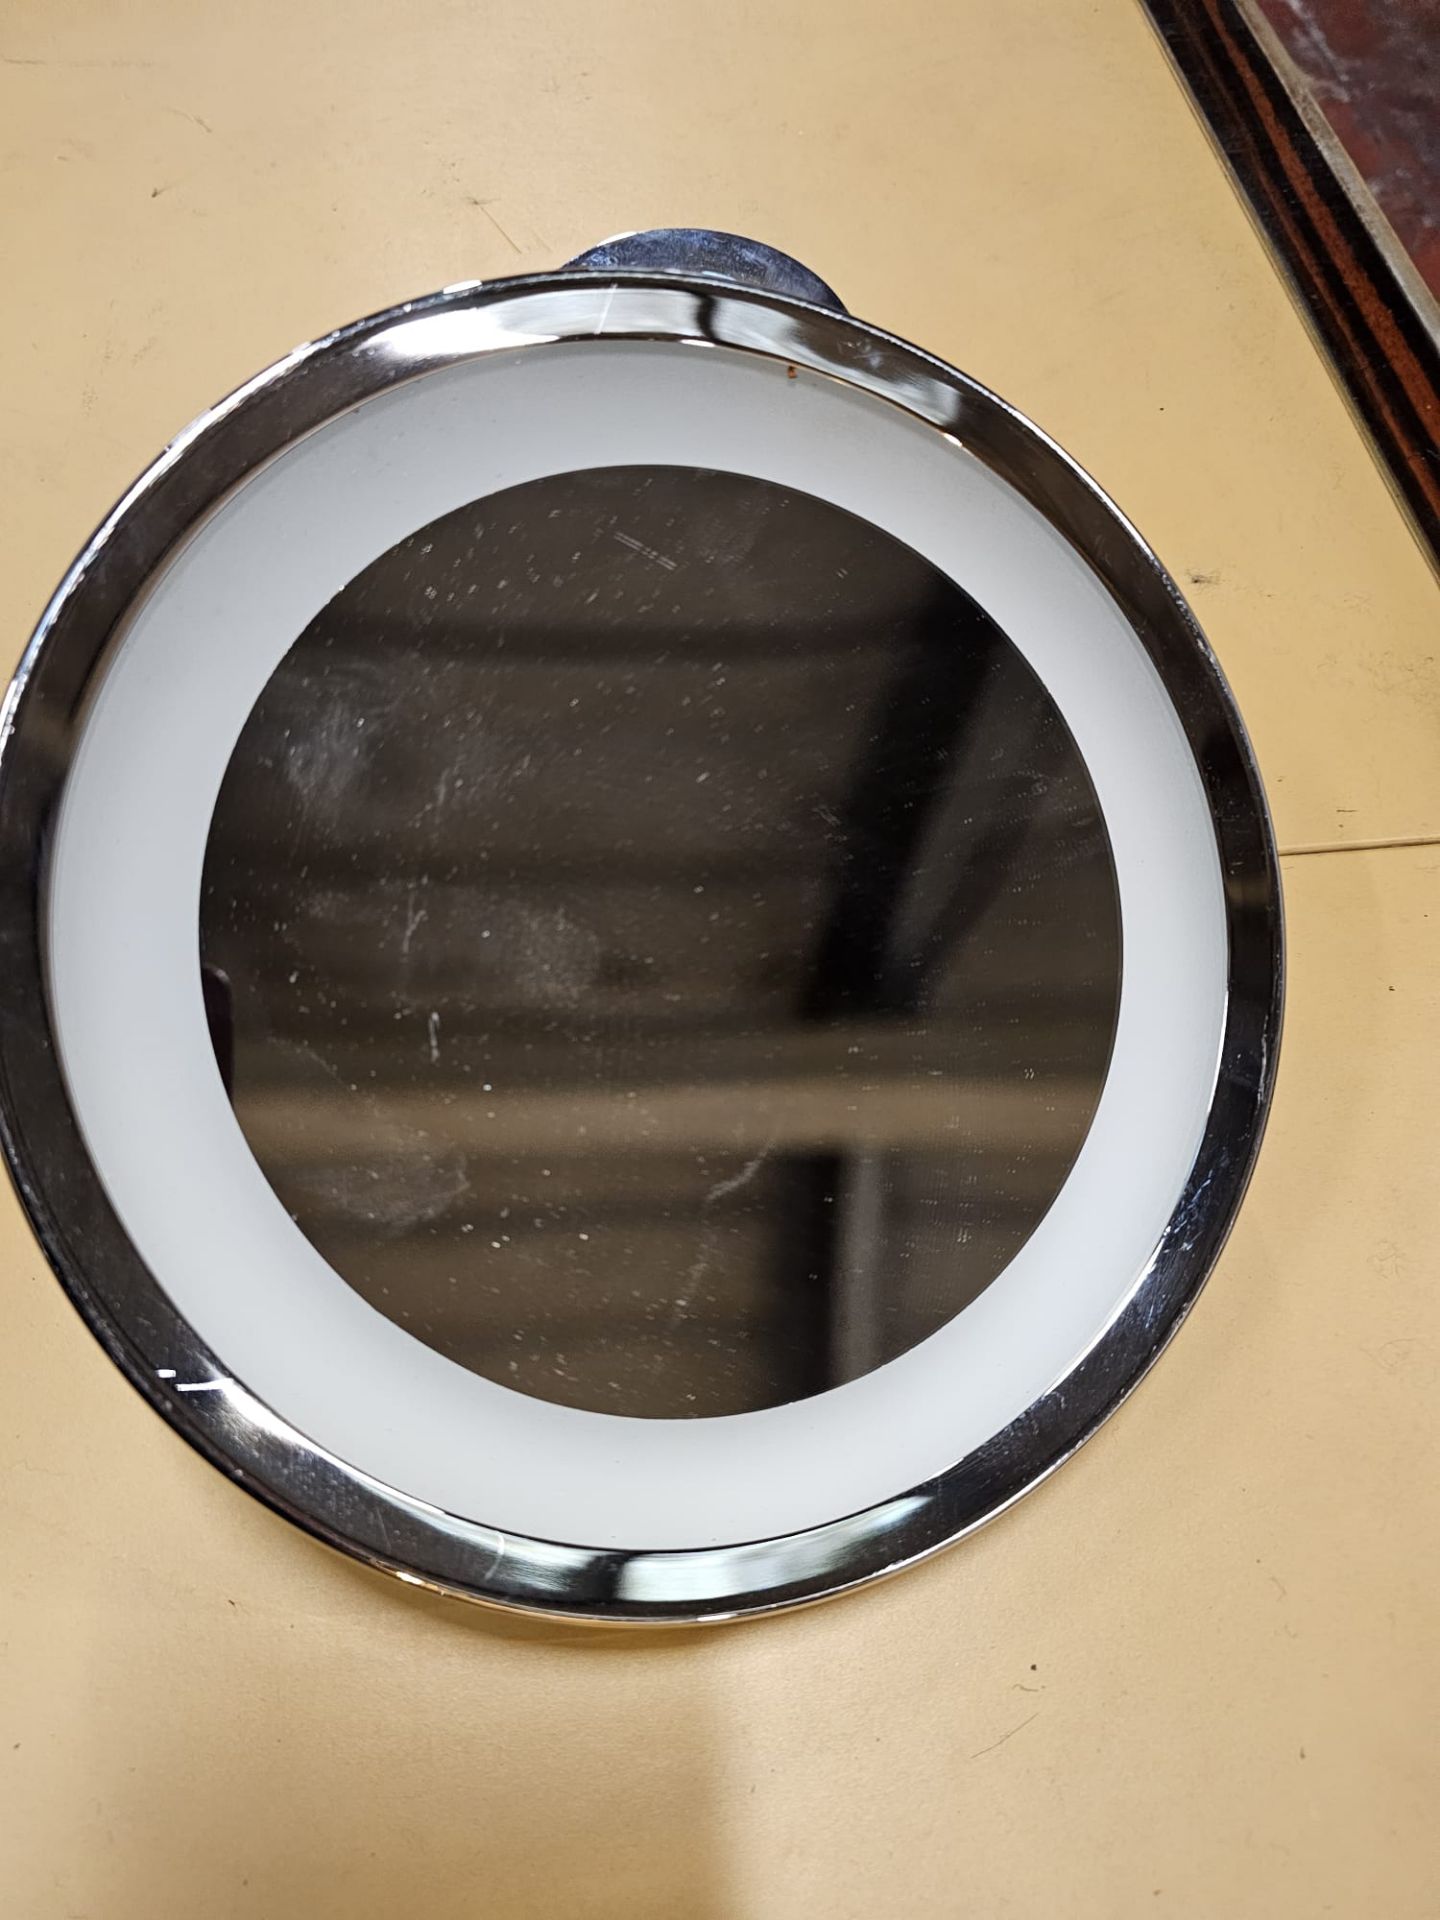 LED Illuminated Magnifying Vanity Mirror For Bathroom Round Ingress Protection Rating IP48 - Image 3 of 3